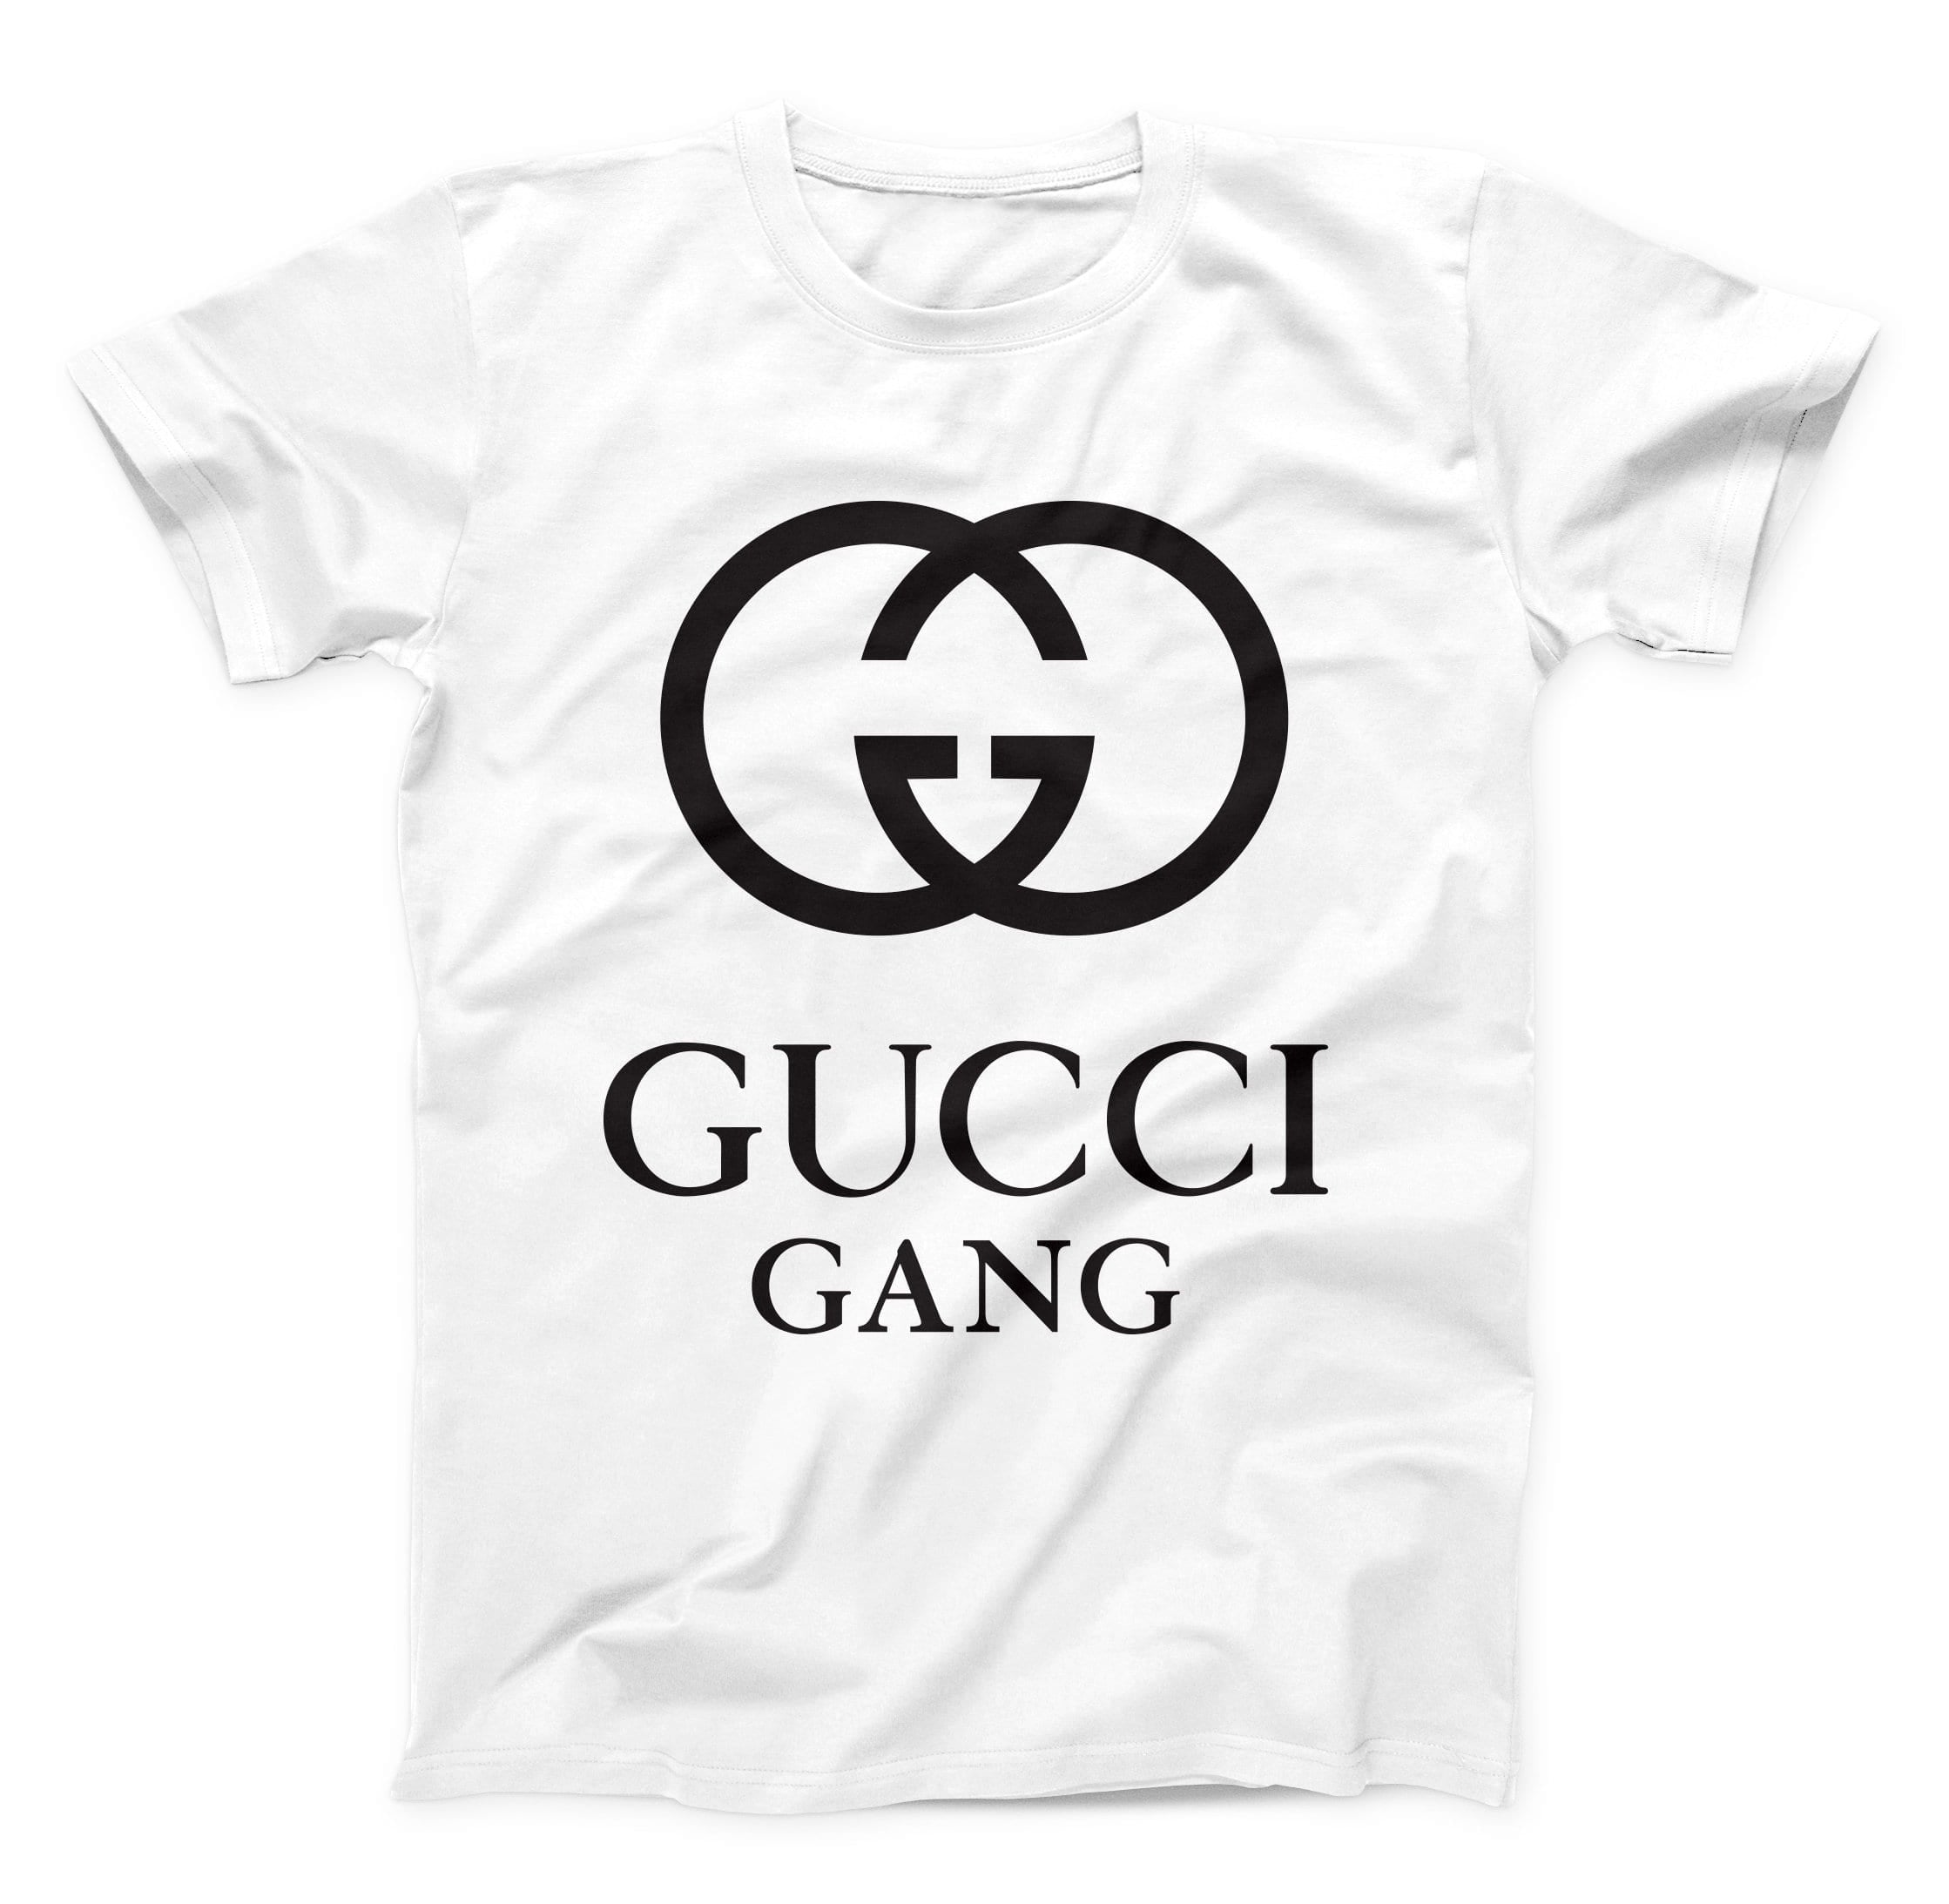 girl gang shirt gucci